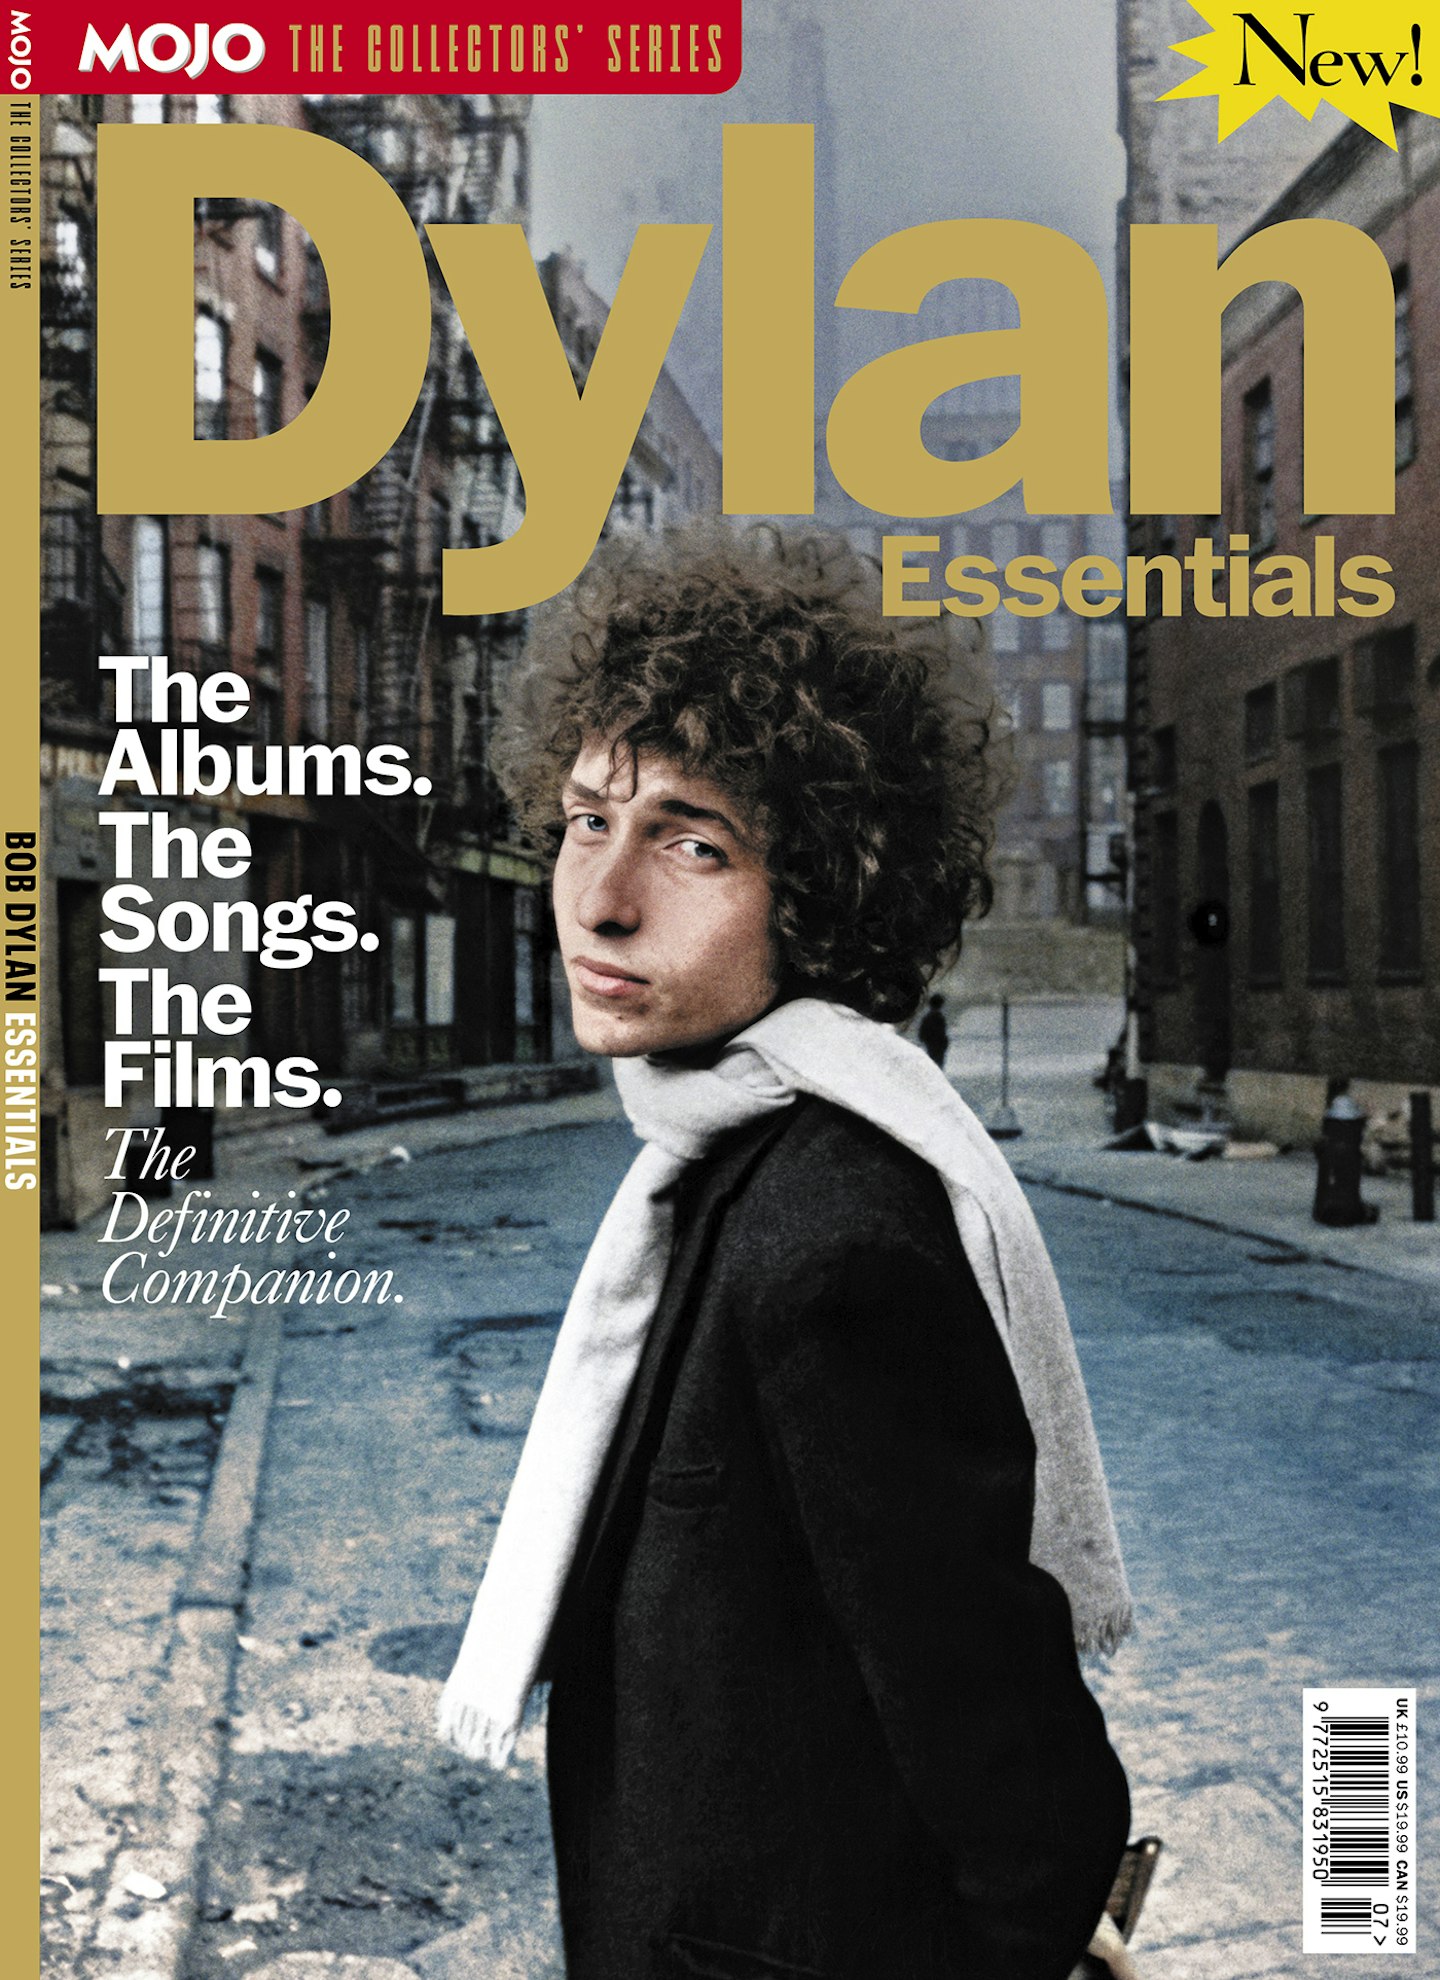 MOJO The Collectors’ Series: Bob Dylan Essentials